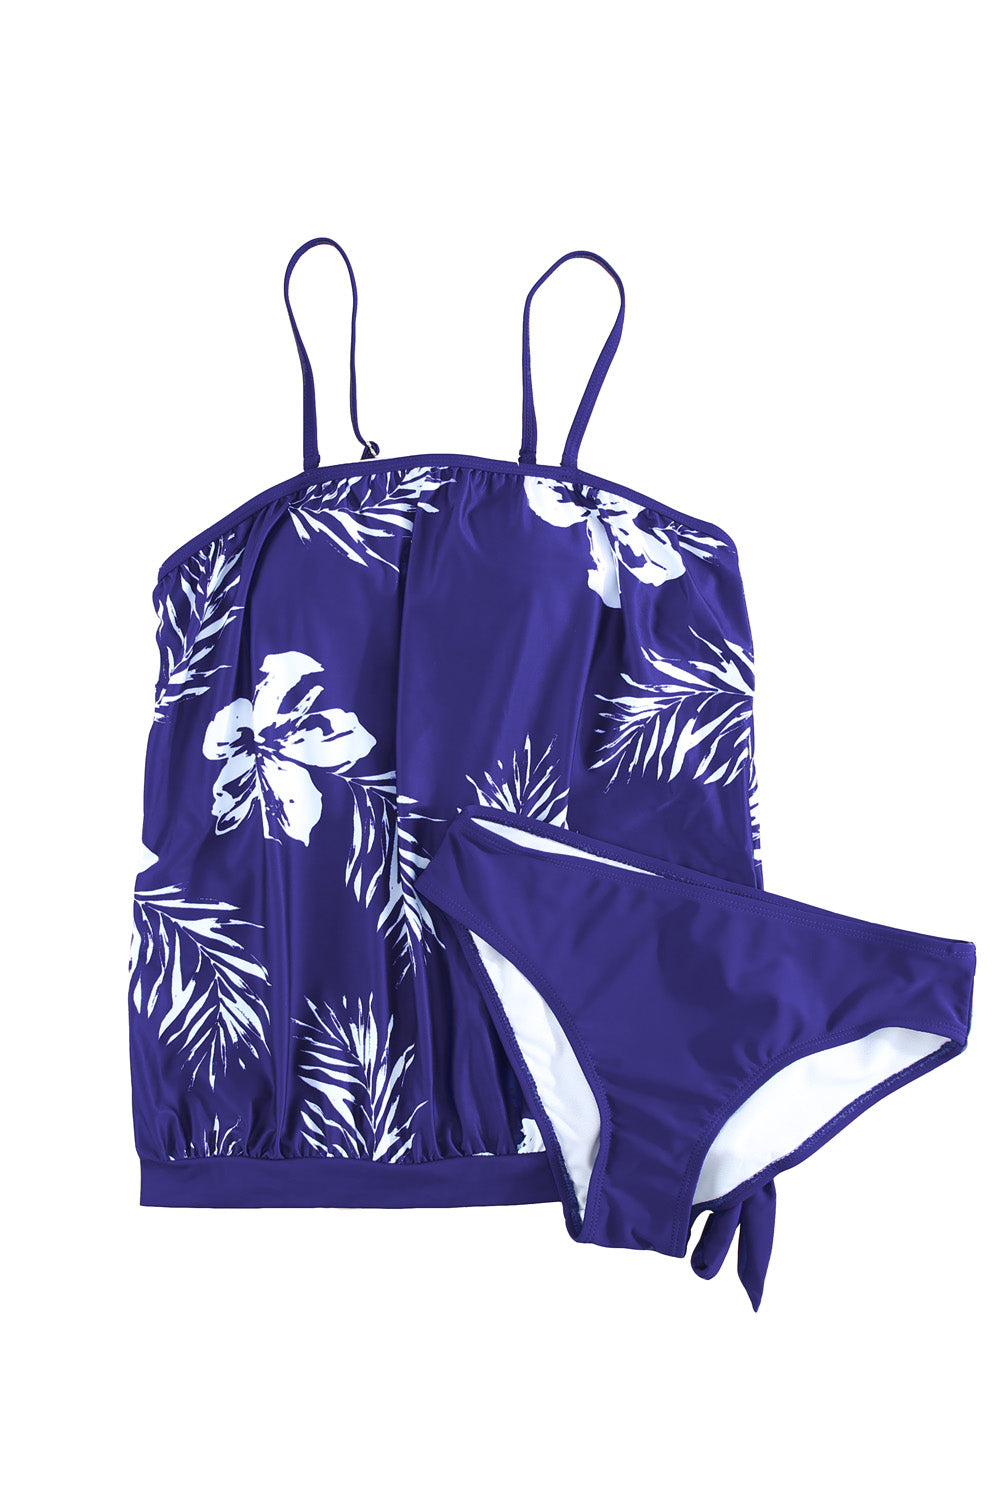 Blue Floral Pattern Strapless Tankini Set